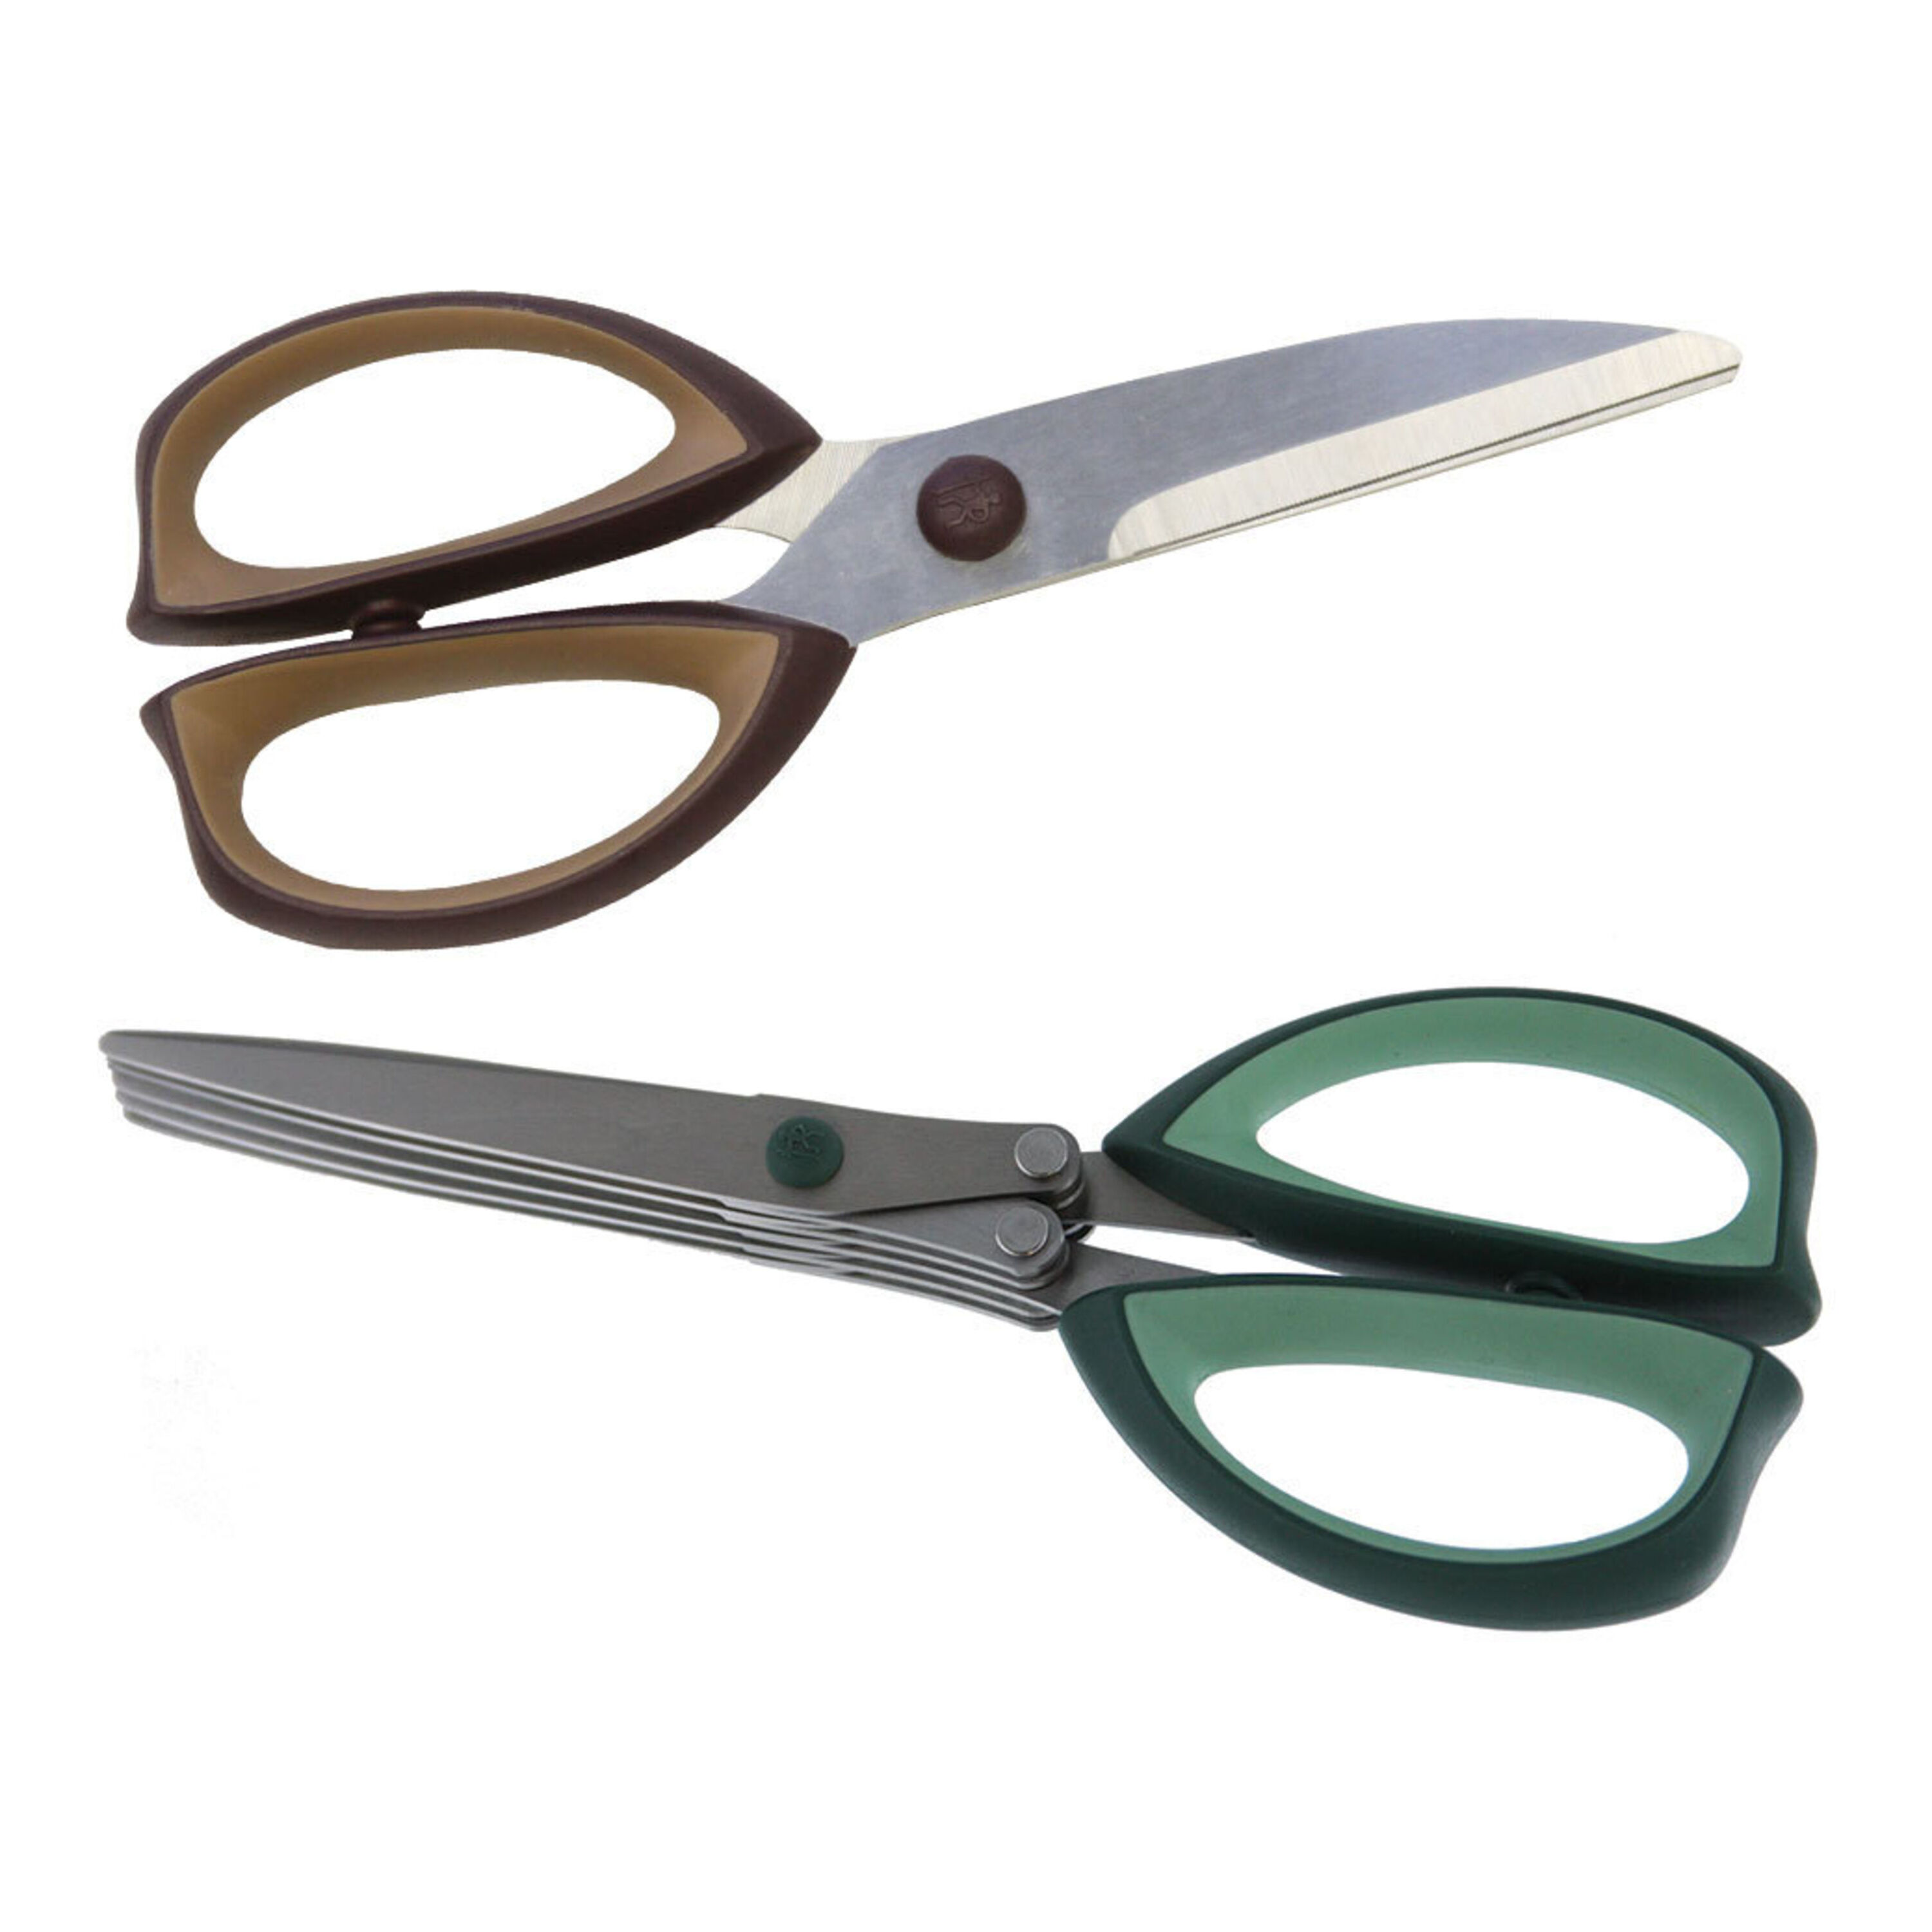 5 blade Herb Scissors - The BBQ Allstars